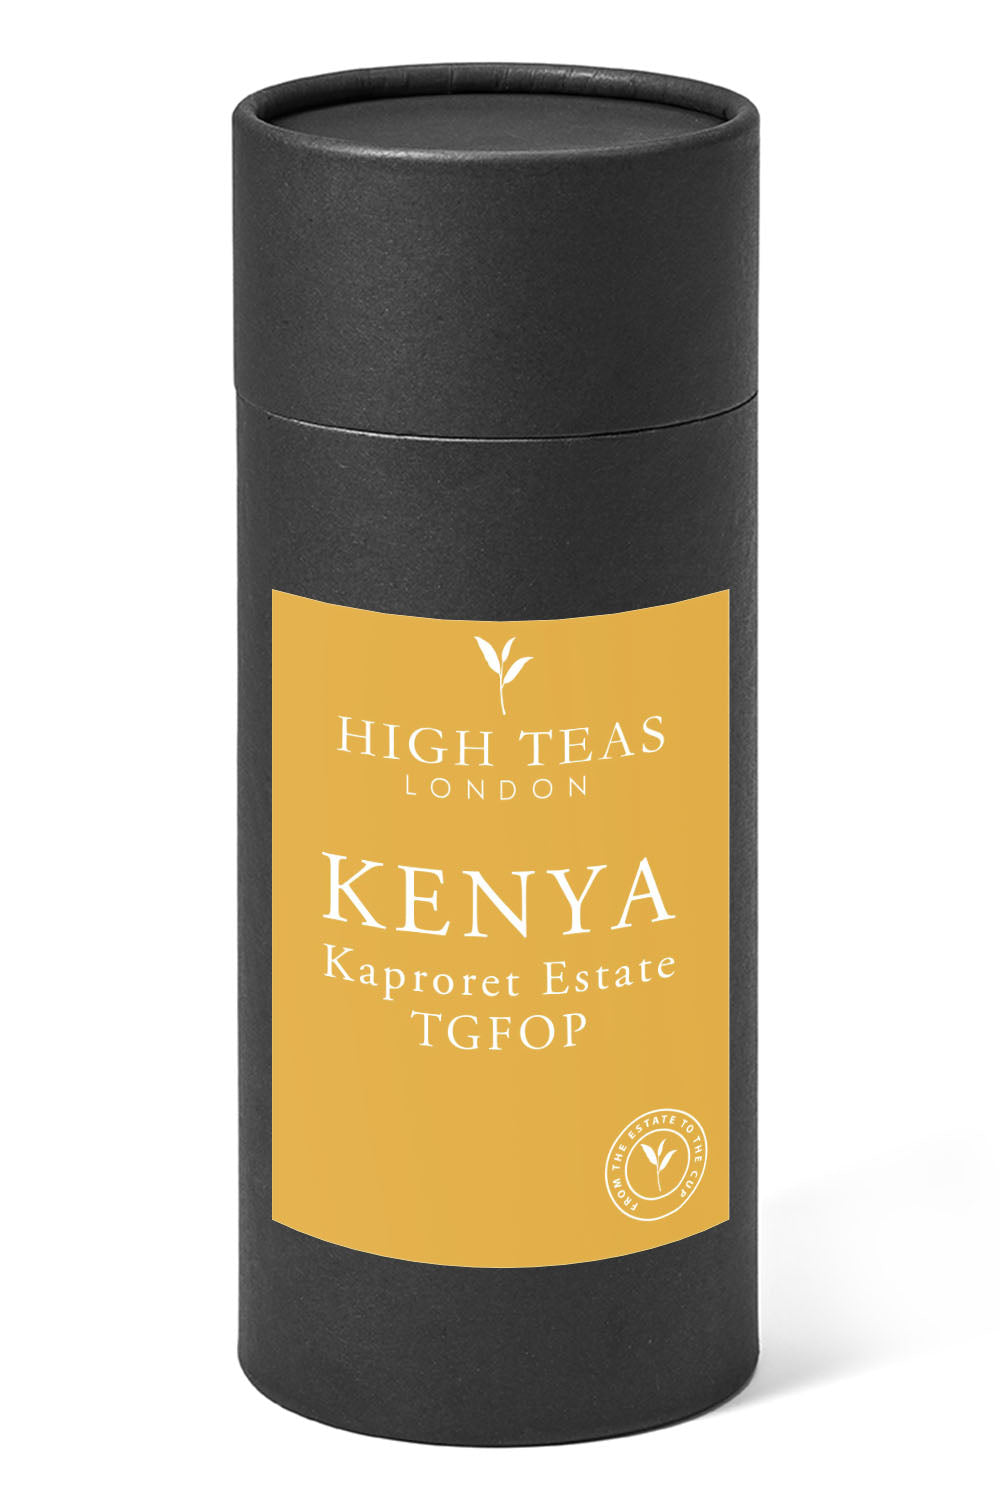 Kenya Kaproret Estate TGFOP-150g gift-Loose Leaf Tea-High Teas